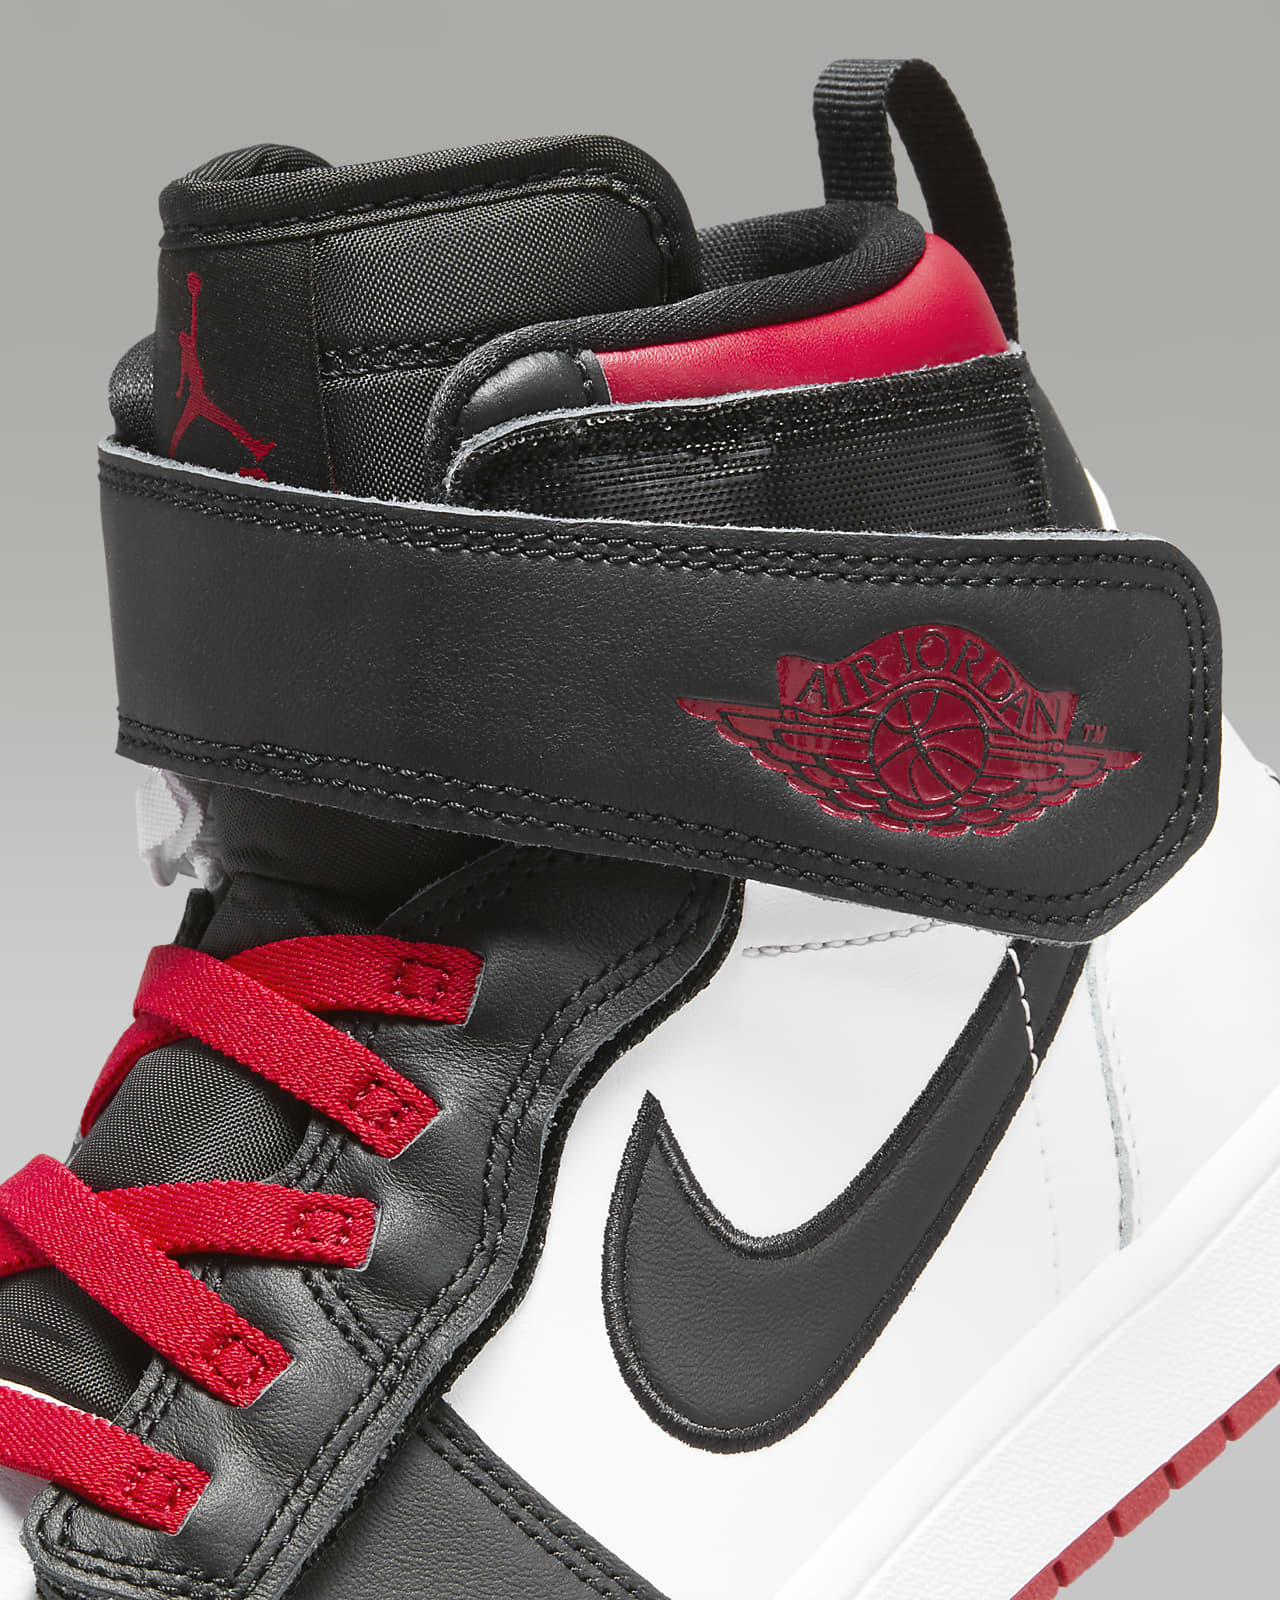 Nike Air Force 1 Mid Bred - Red - Hi-Top Sneakers